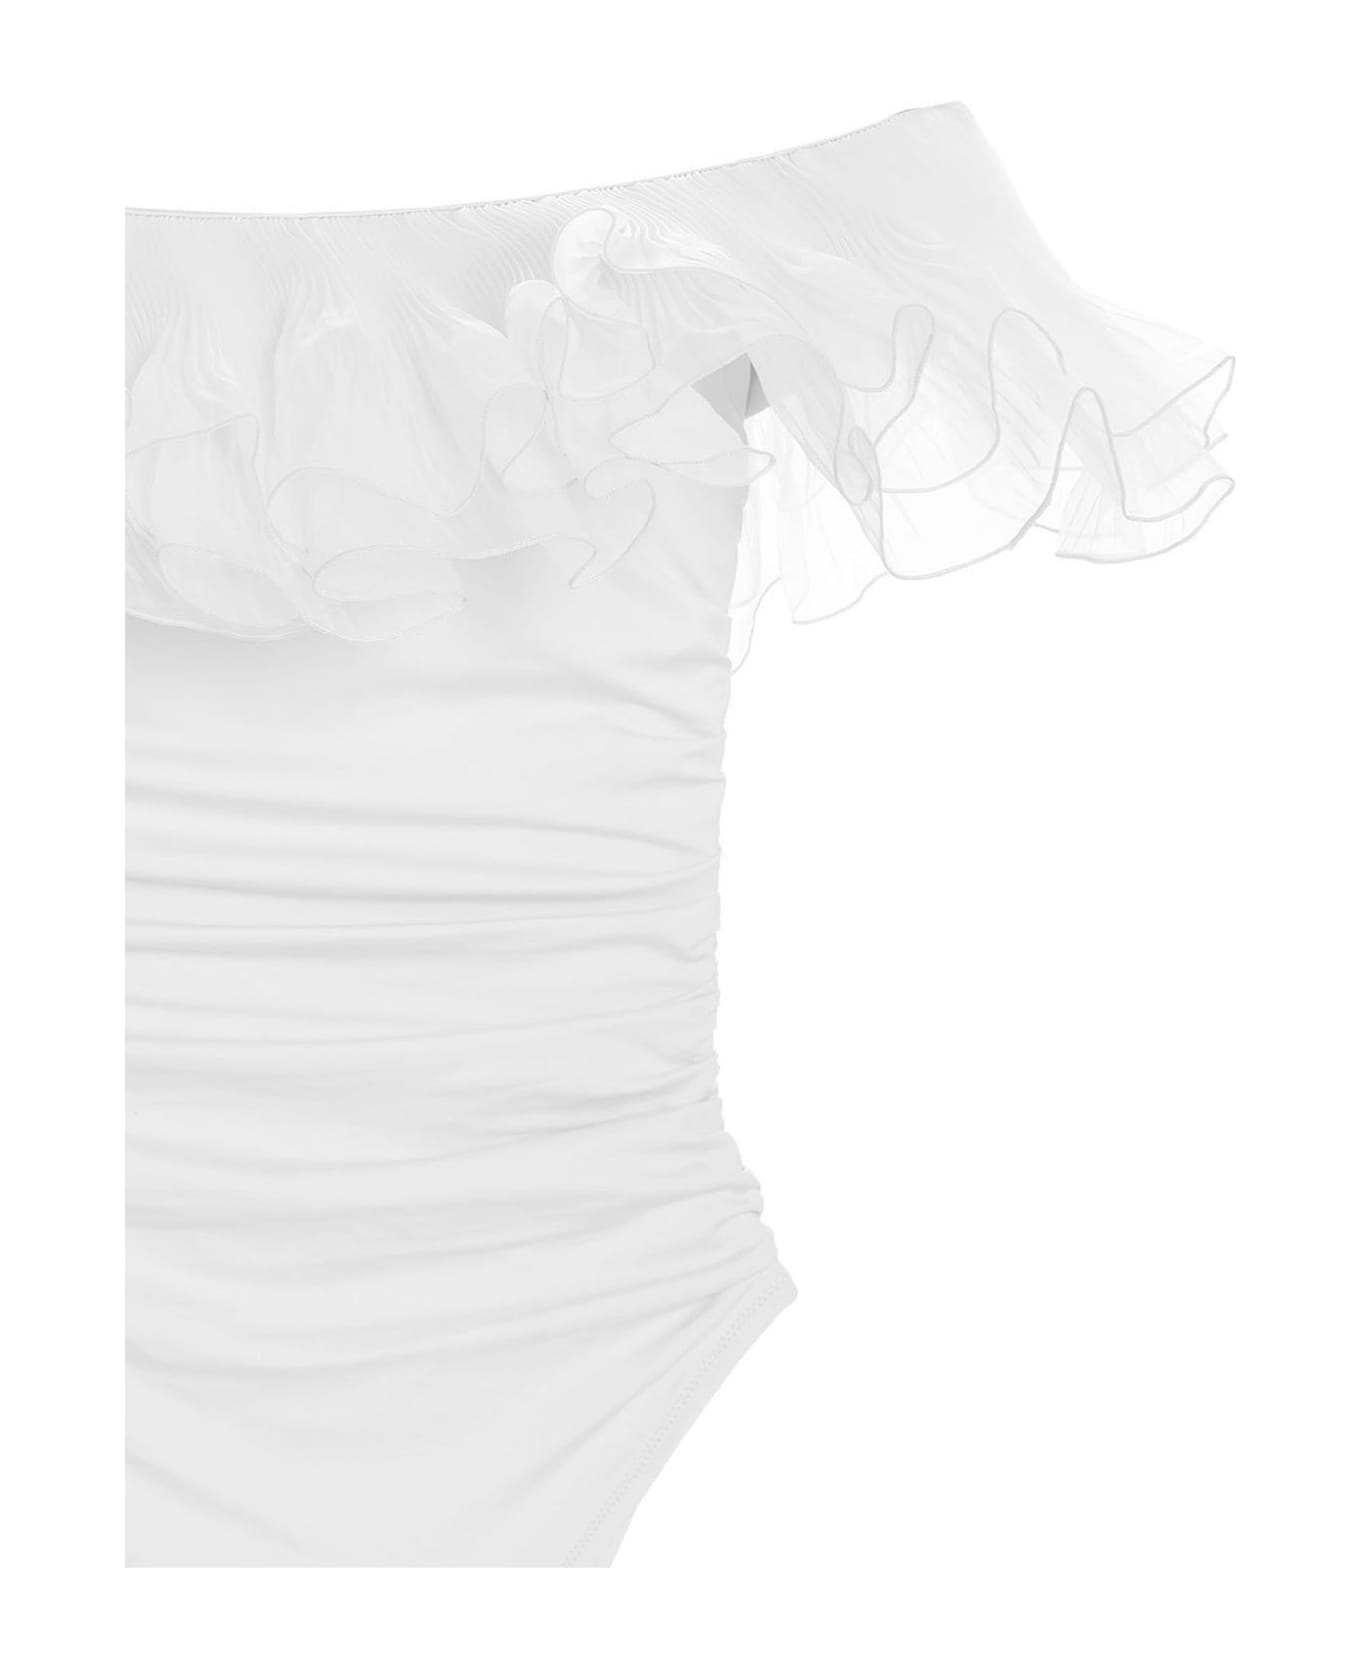 Giambattista Valli One-piece Off-the-shoulder Ruffles Swimsuit - White